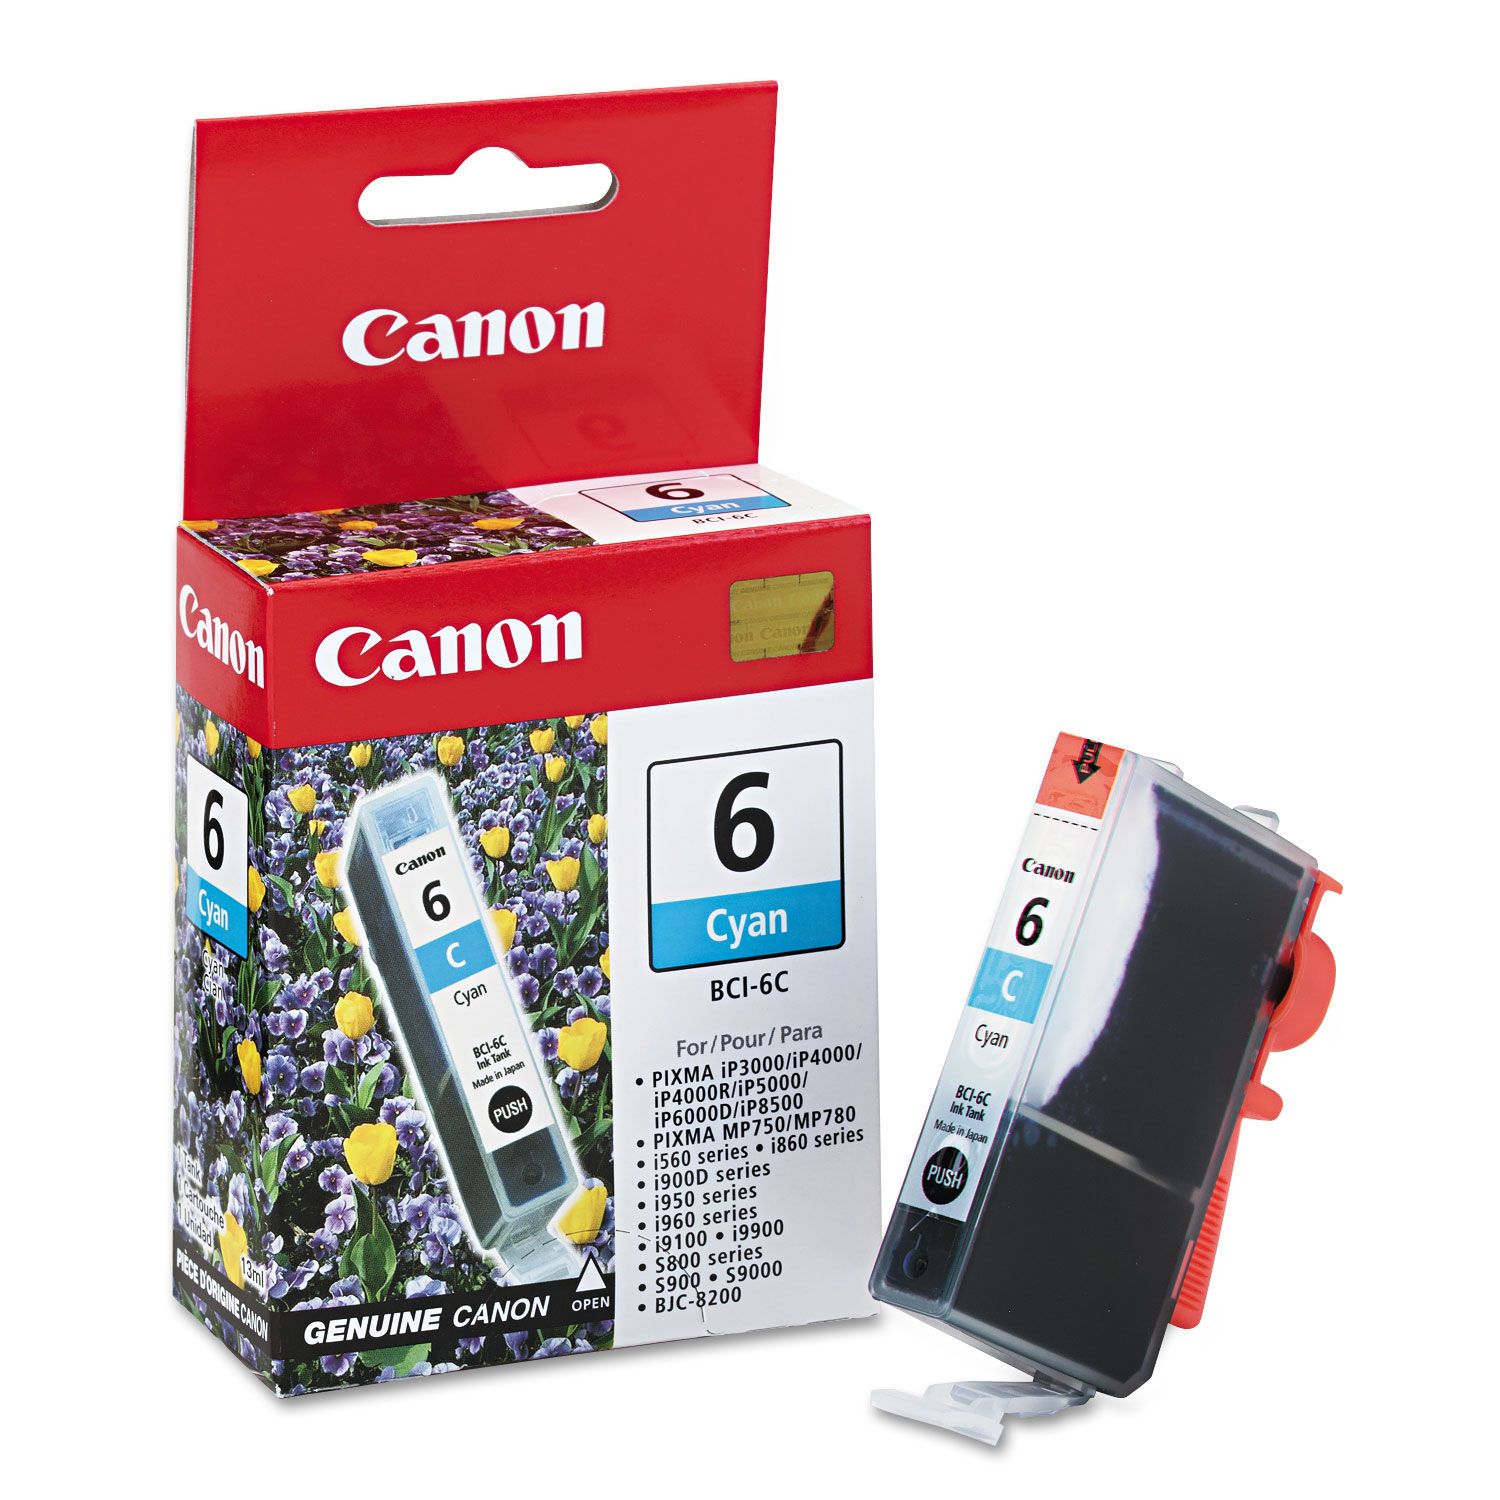 Absolute Toner Canon BCI-6C Cyan Original Genuine OEM Ink Cartridge | 4706A003 Original Canon Cartridges